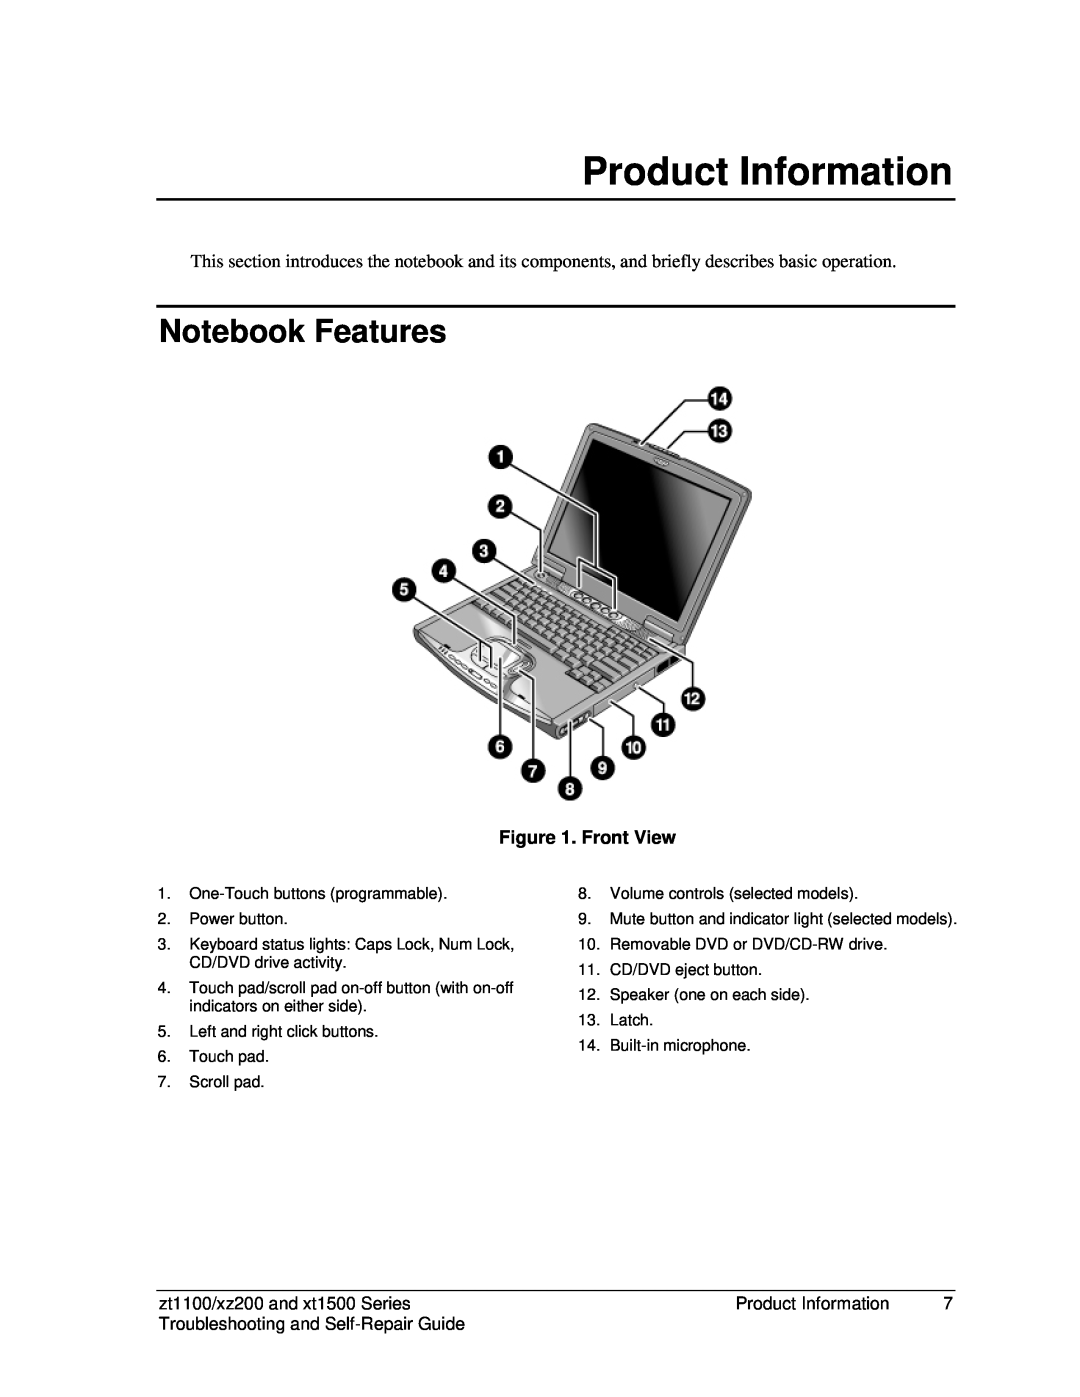 3D Connexion XZ200, ZT1000, XT1500 manual Product Information, Notebook Features, Front View, zt1100/xz200 and xt1500 Series 